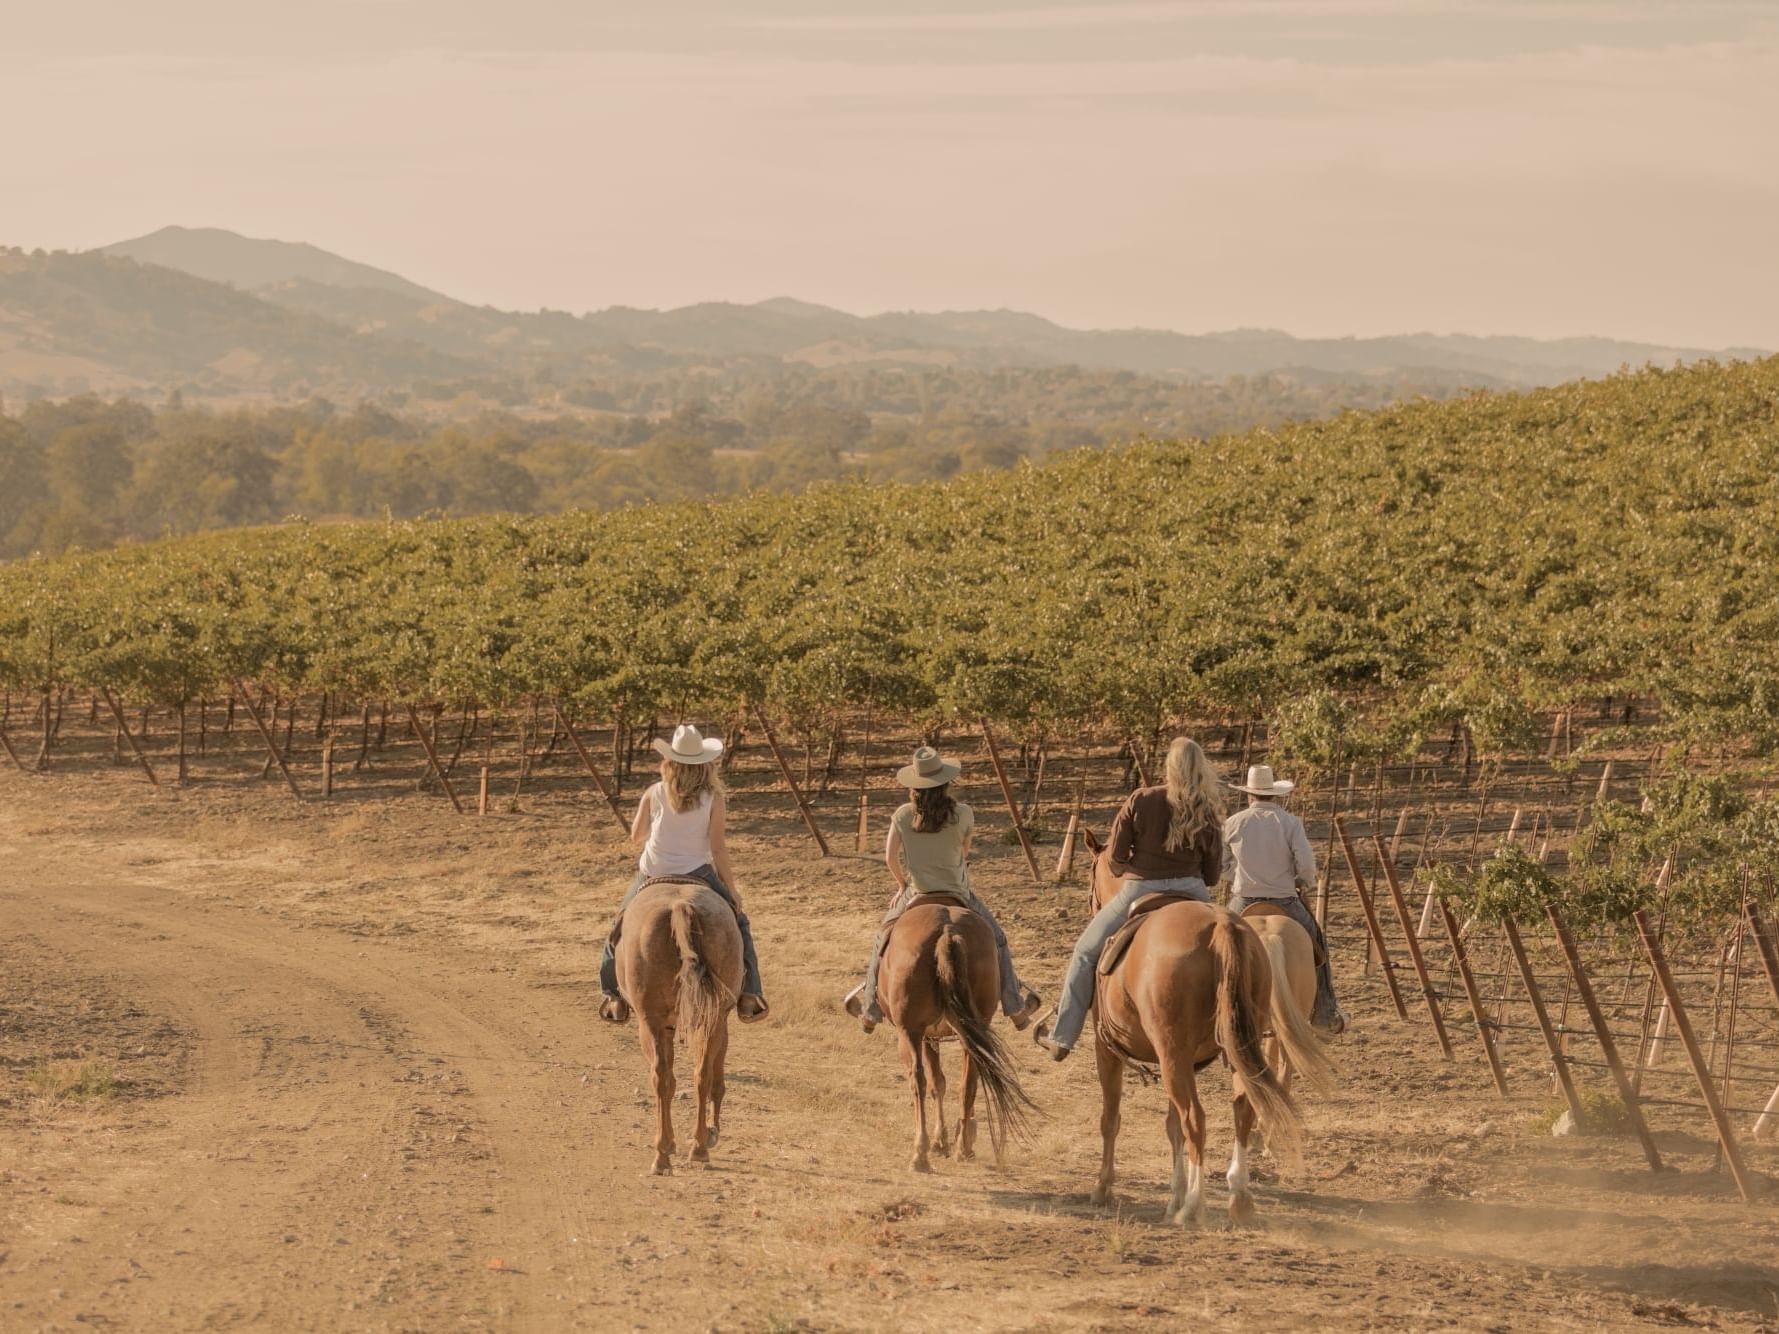 People riding horses through a vineyard